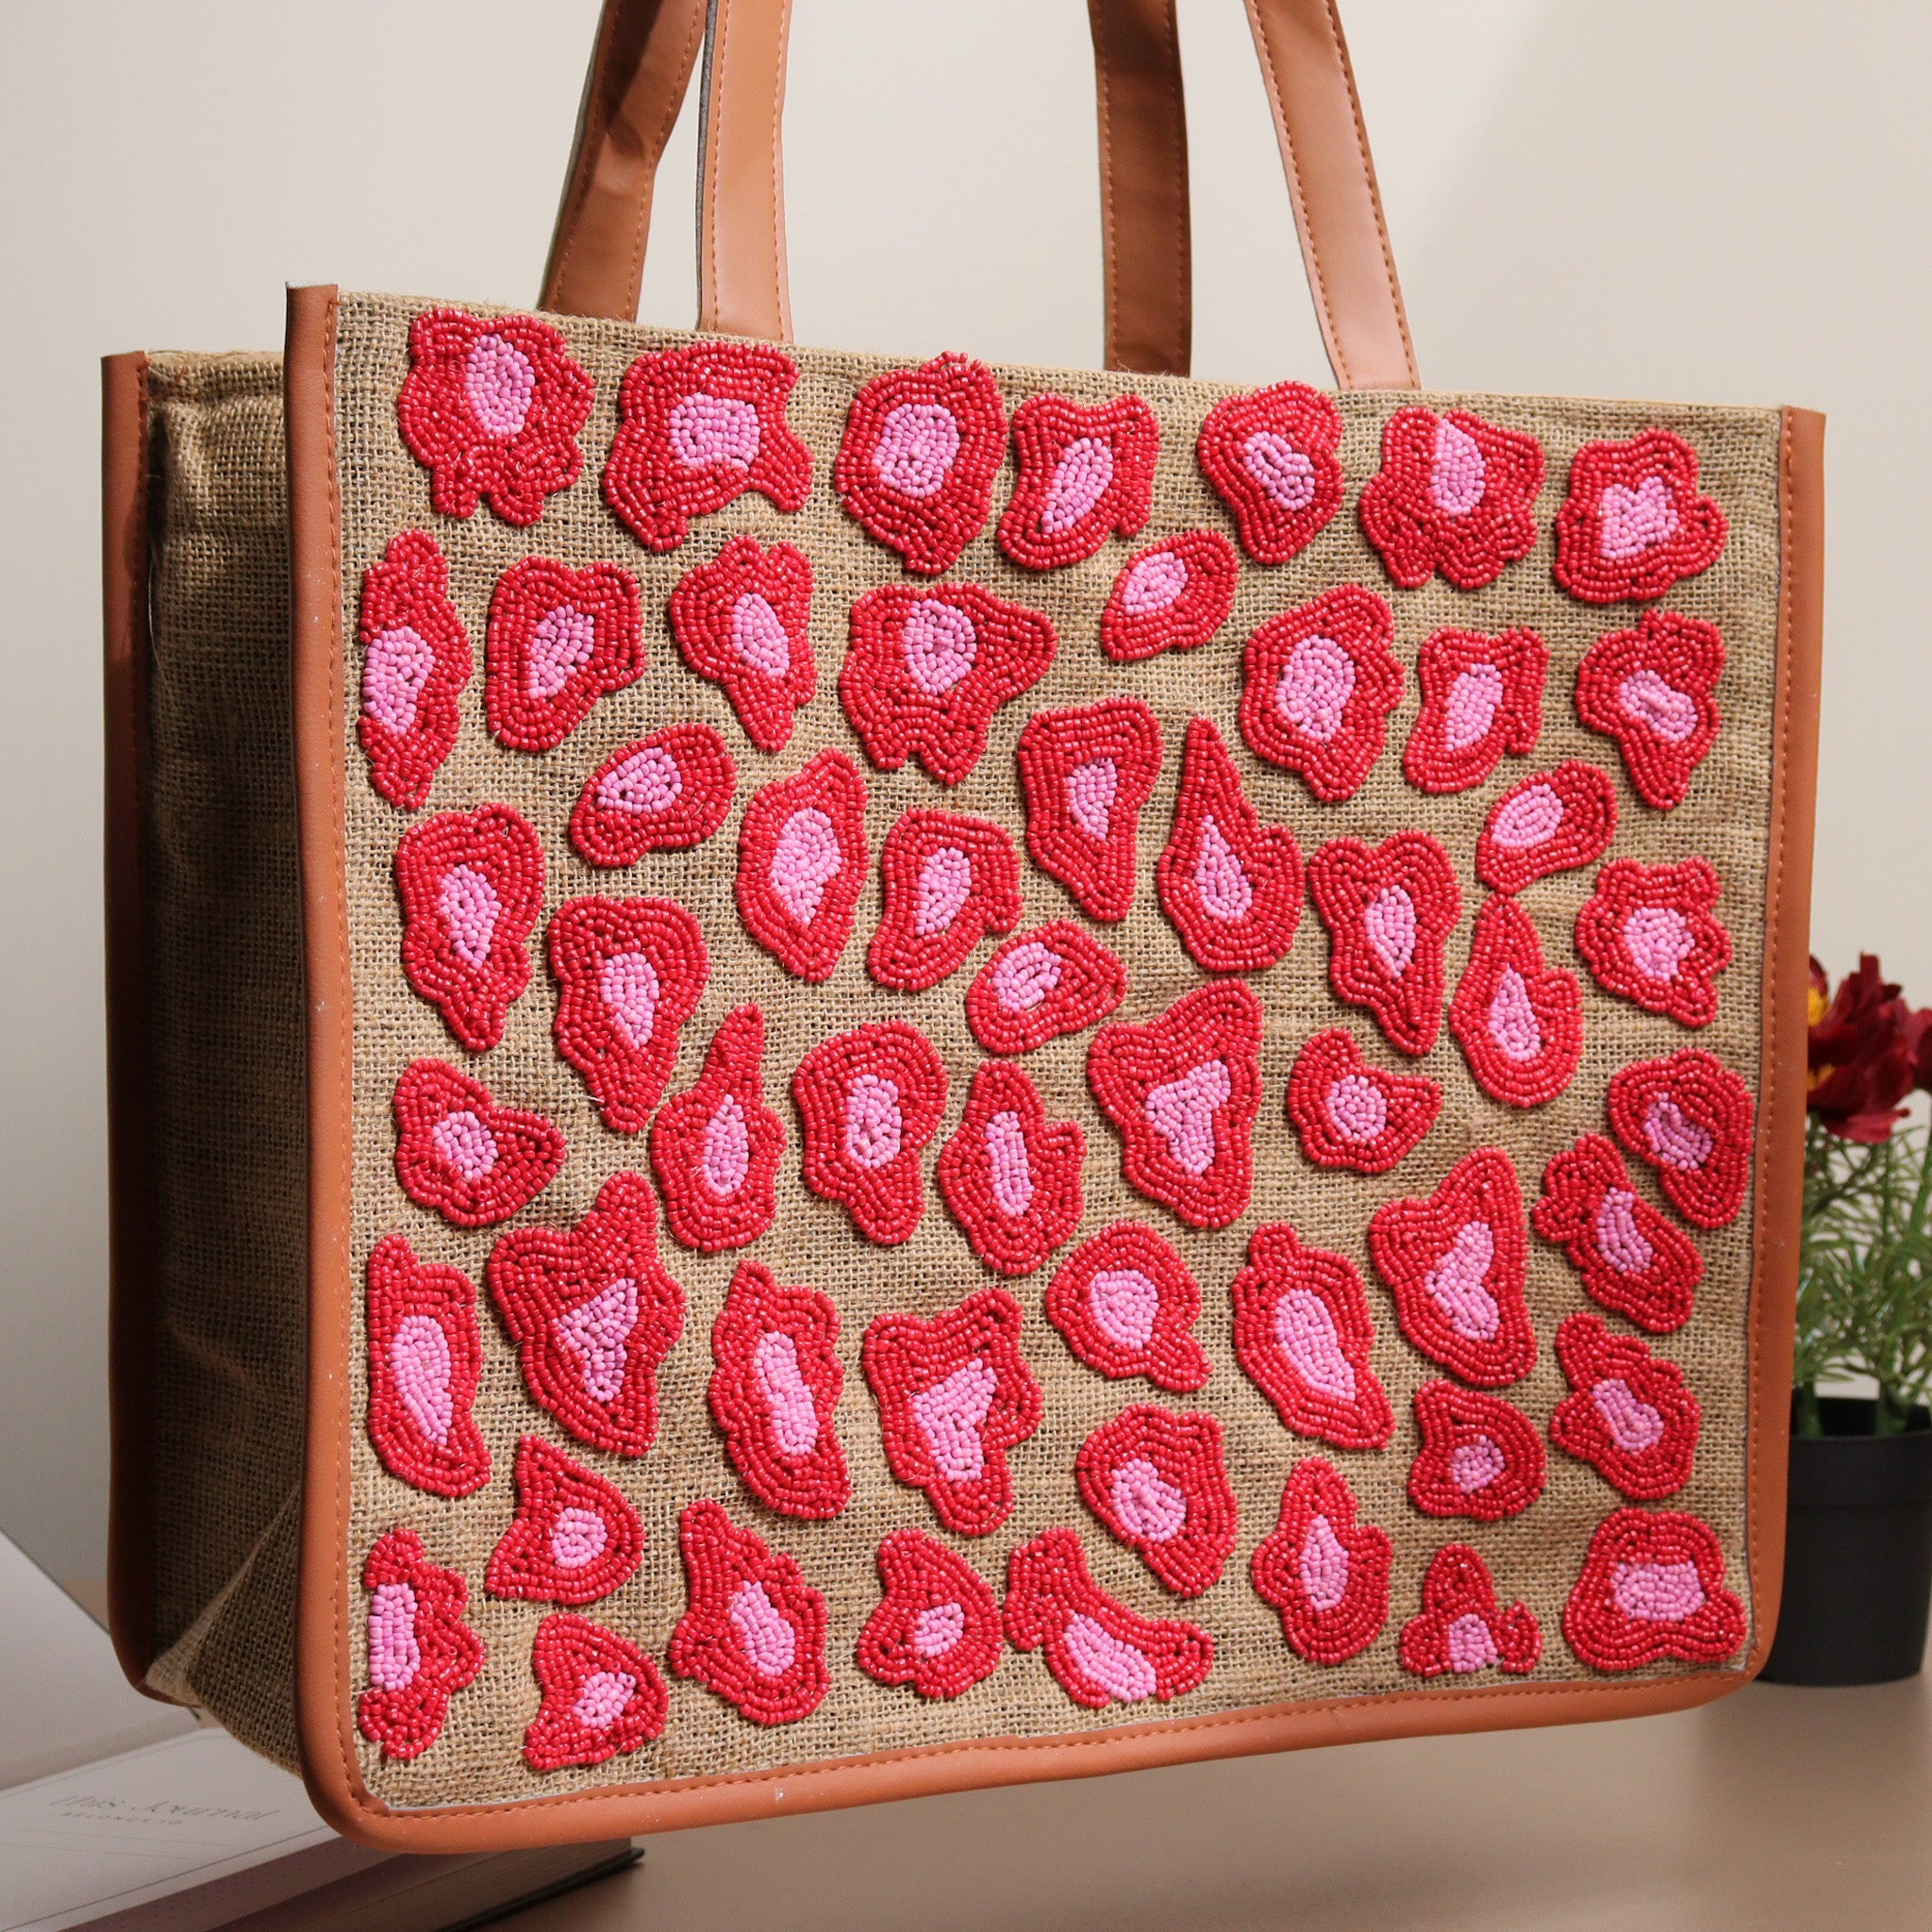 Cherry Tote Bag